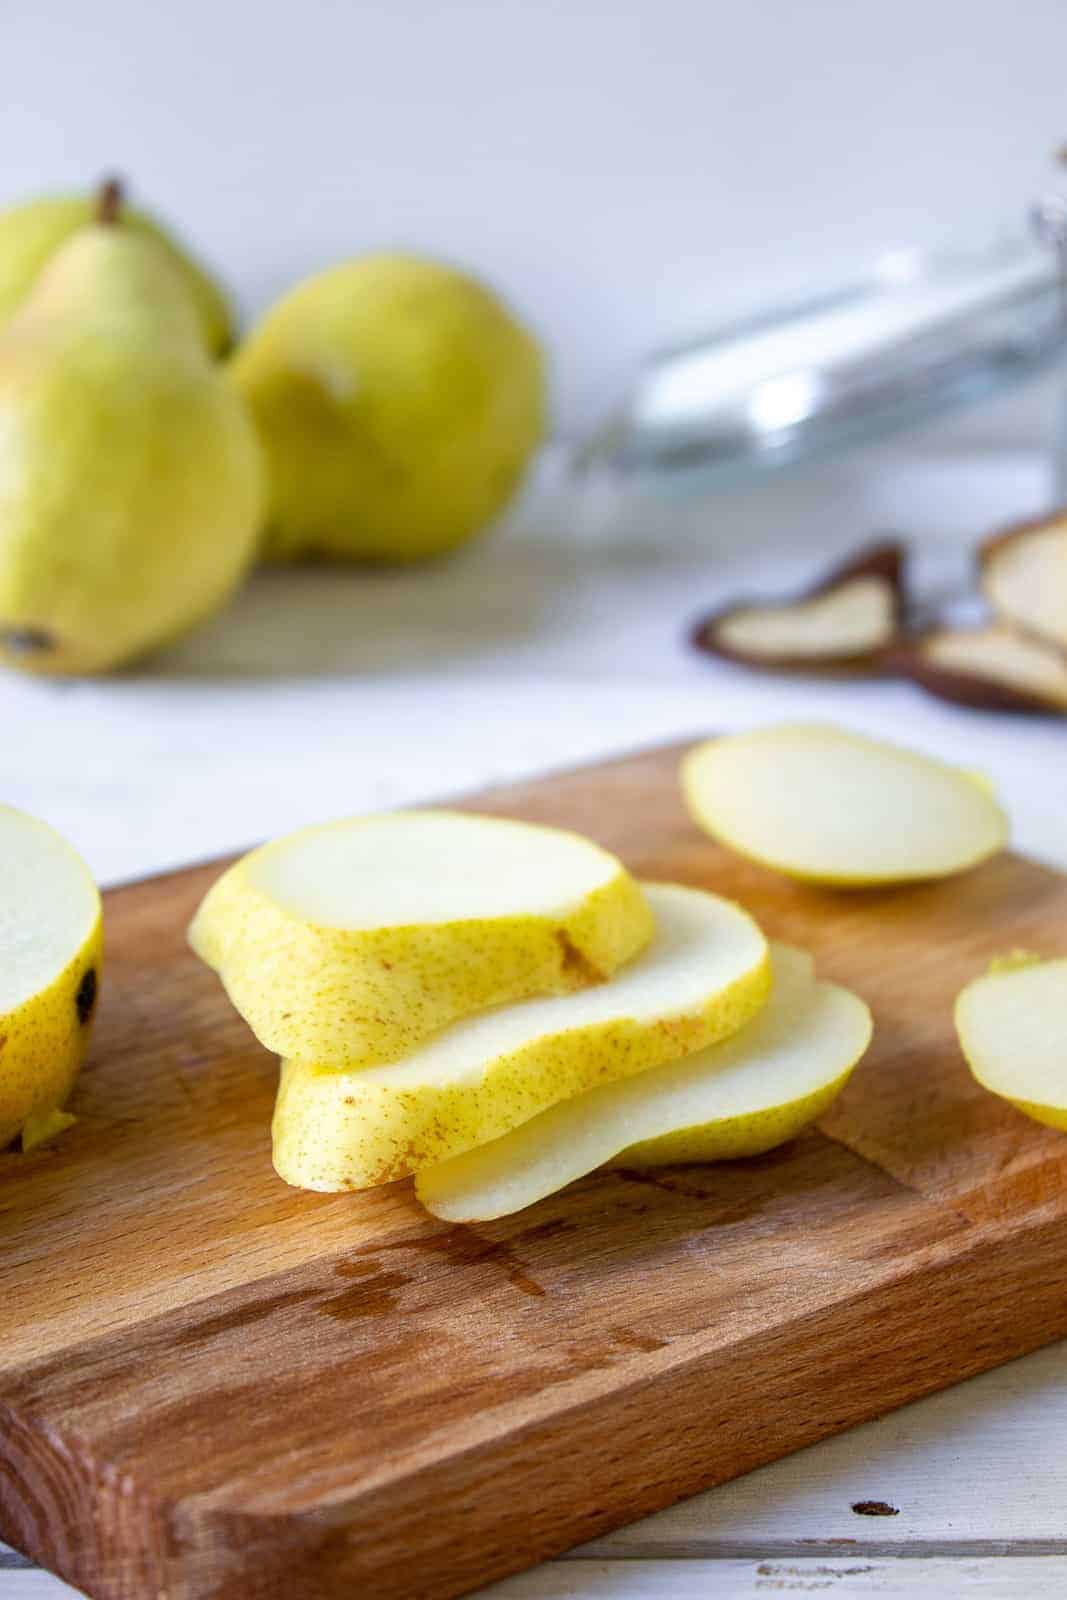 Slices of fresh pear on a cutting board.